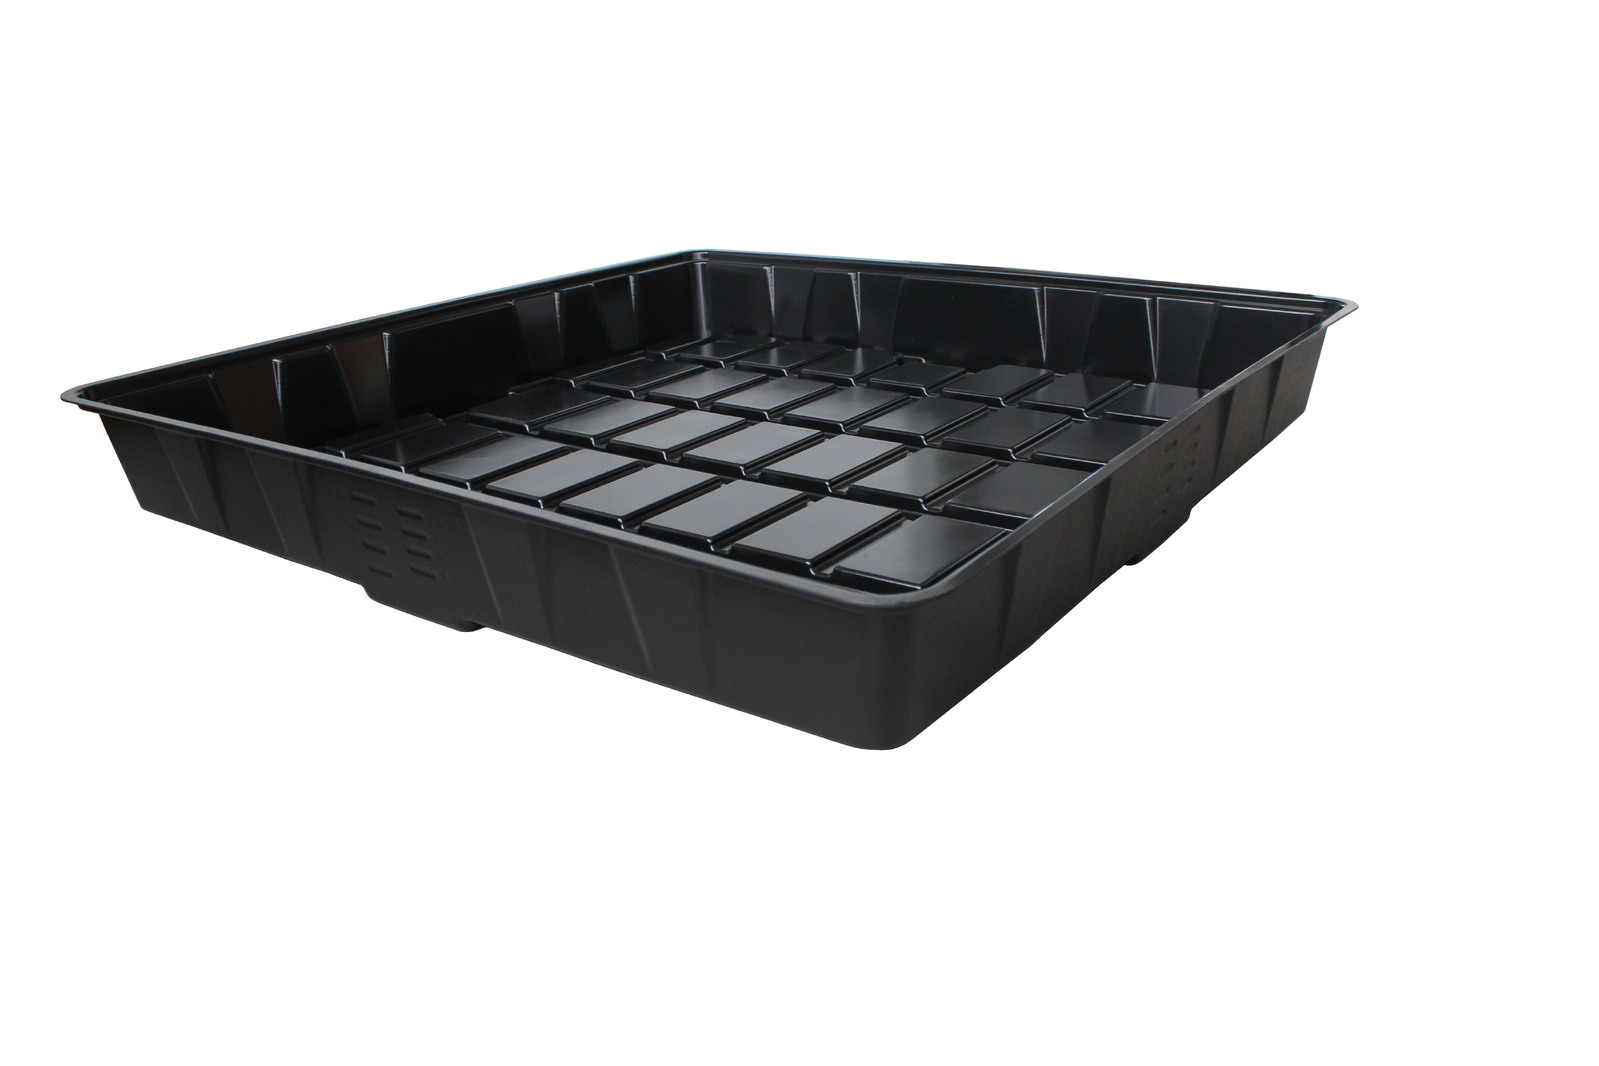 120 x 120 x 15cm Flood &Drain Tray - Pro-grow - high quality - 4mm thick - 4x4model